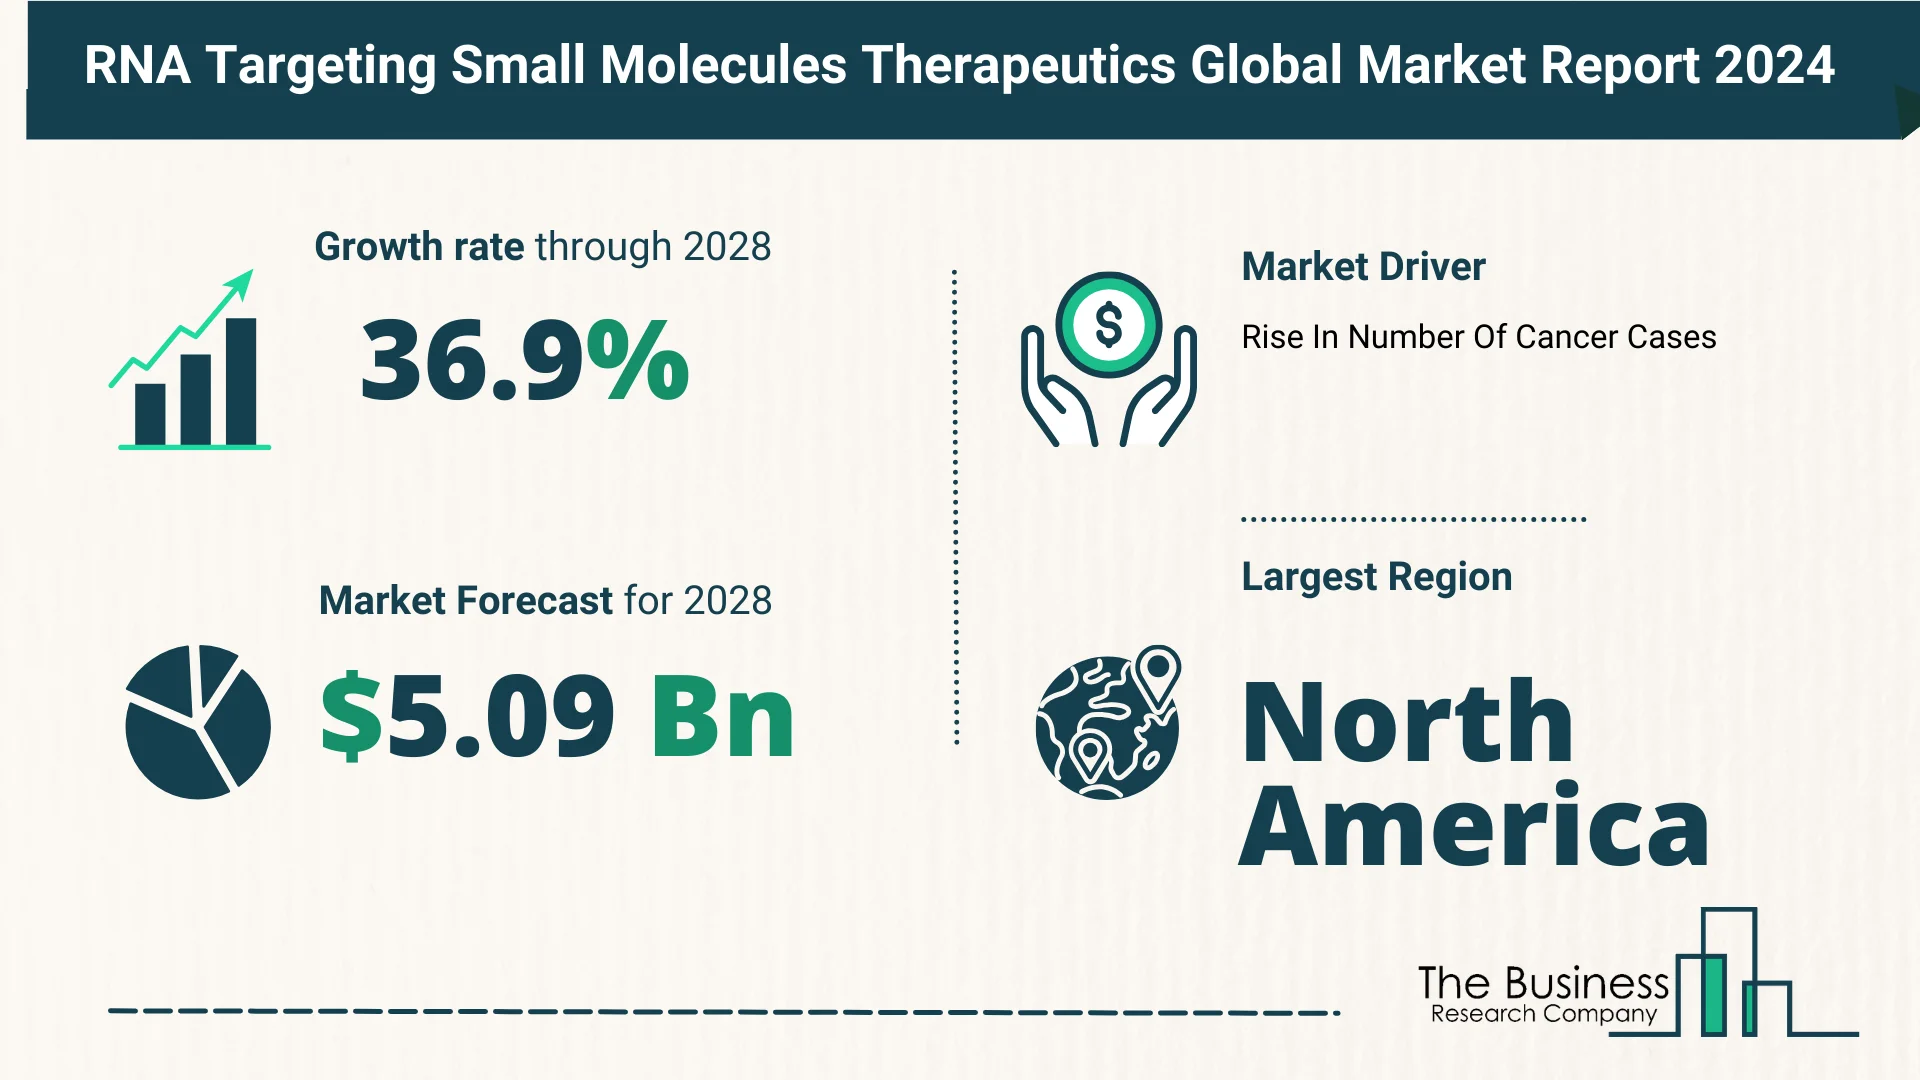 Global RNA Targeting Small Molecules Therapeutics Market Size